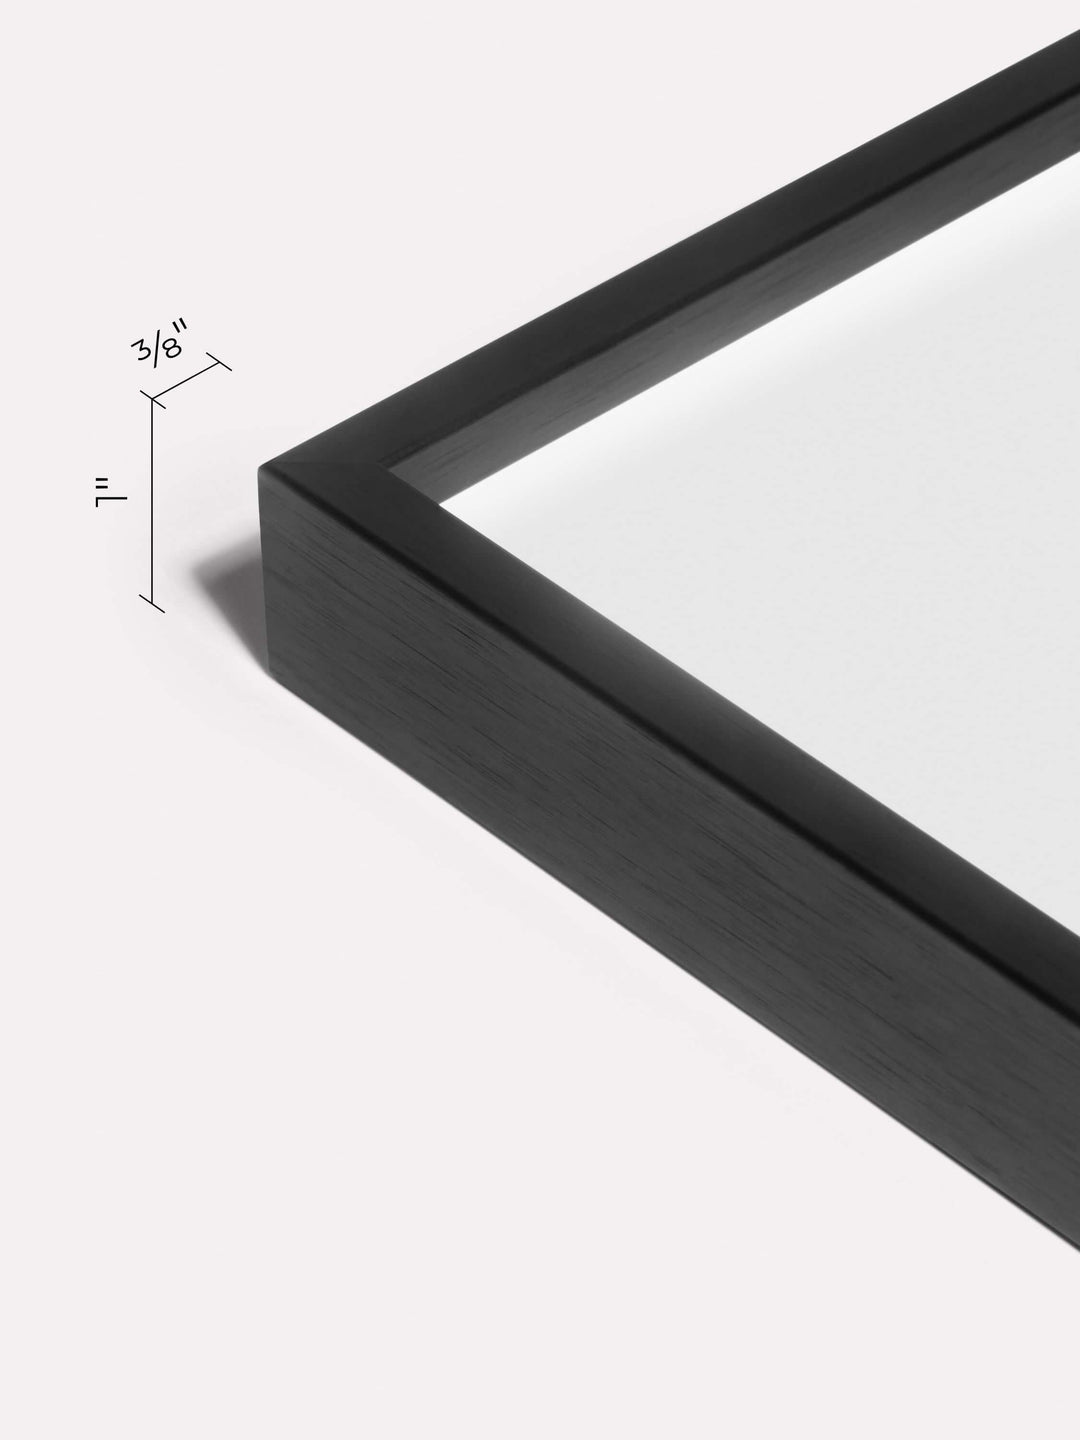 12x12-inch Thin Frame, Black - Close-up view